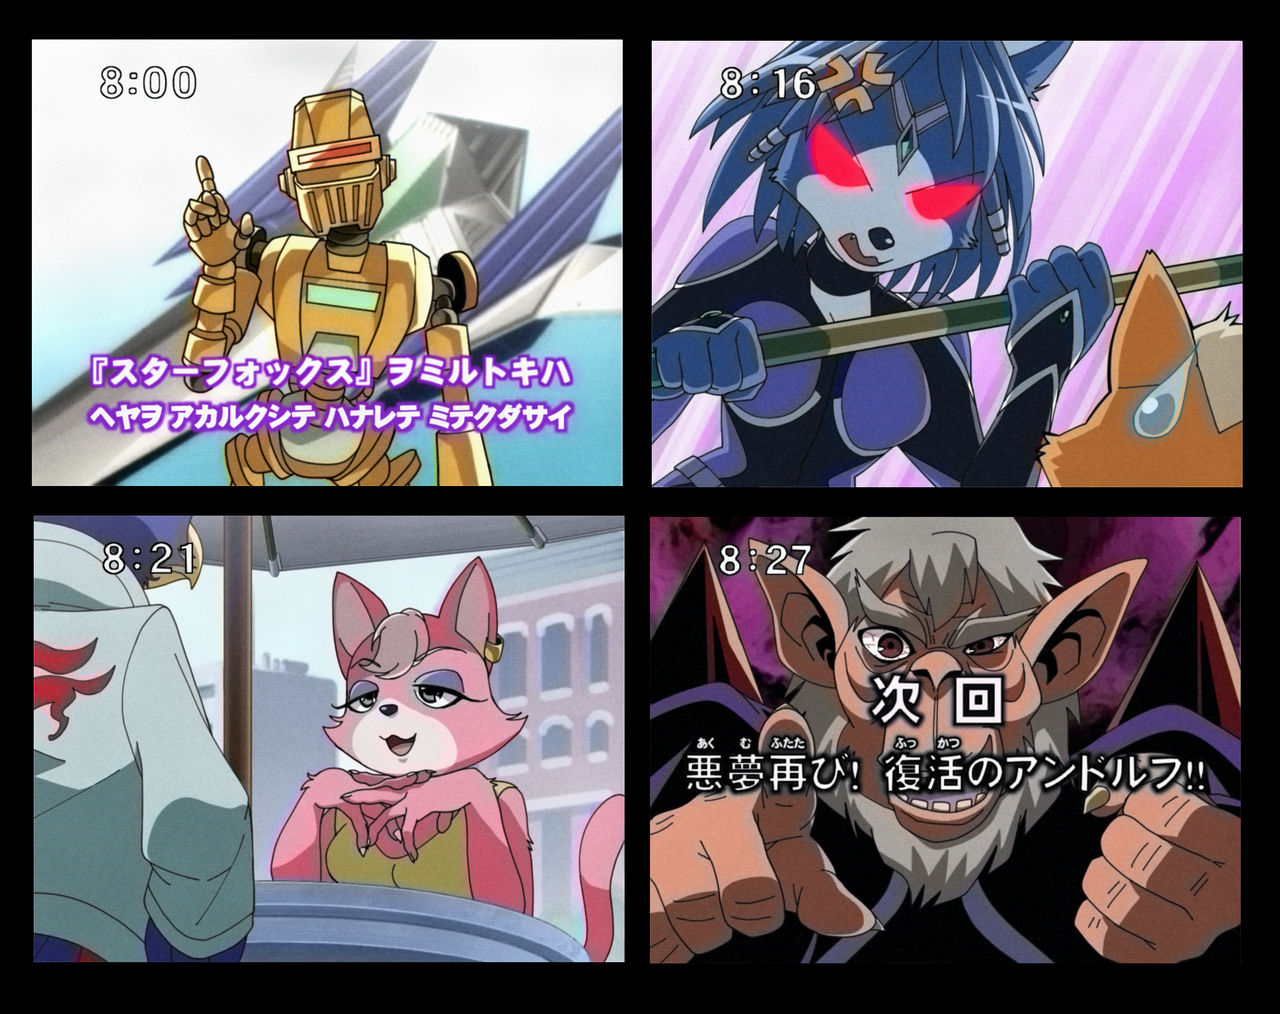 TV Anime series Star Fox Axel by Yukina-Namagaki on DeviantArt